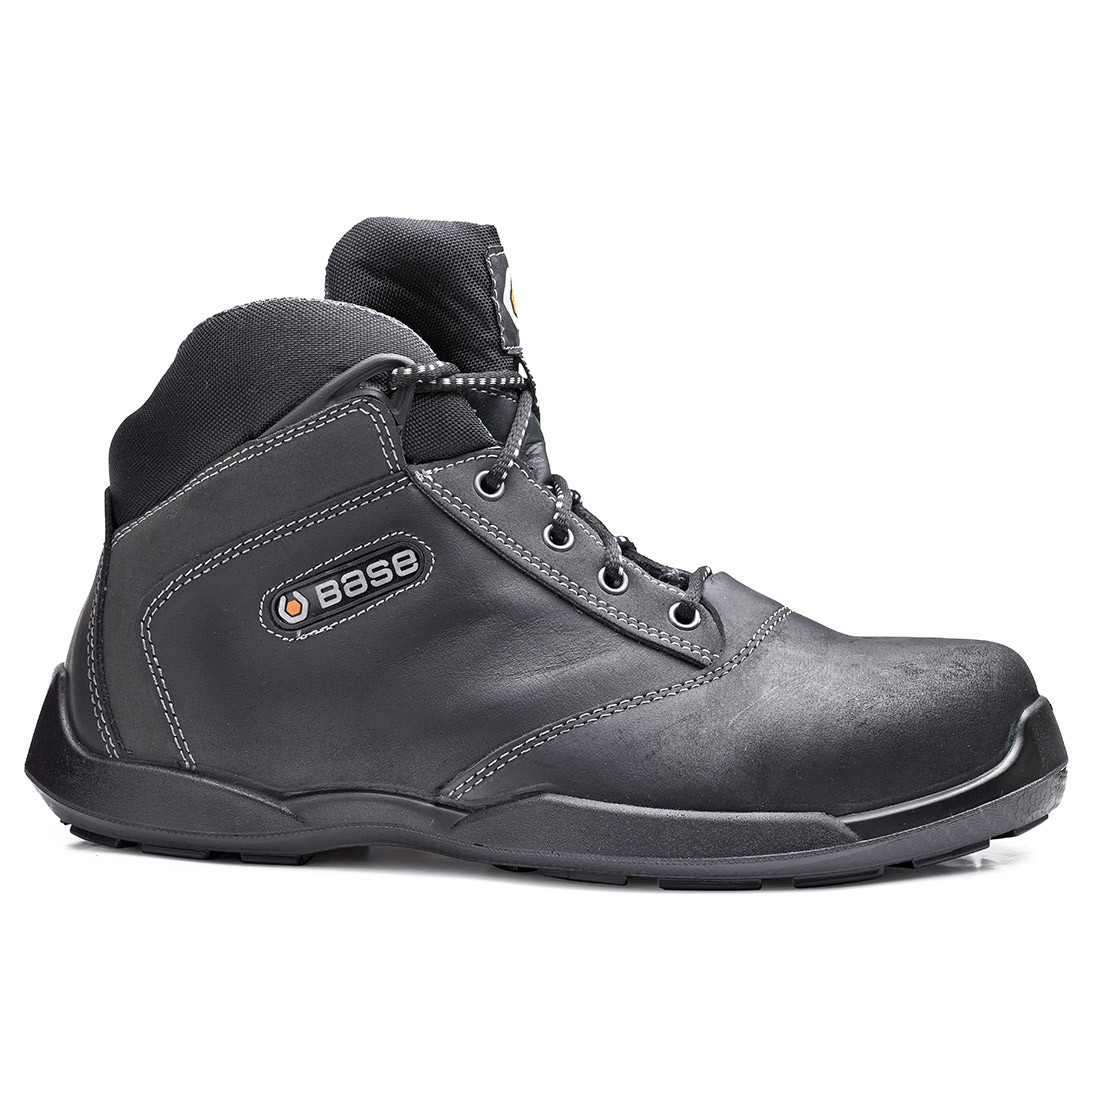 Hockey Boot S3 SRC - Les chaussures de protection